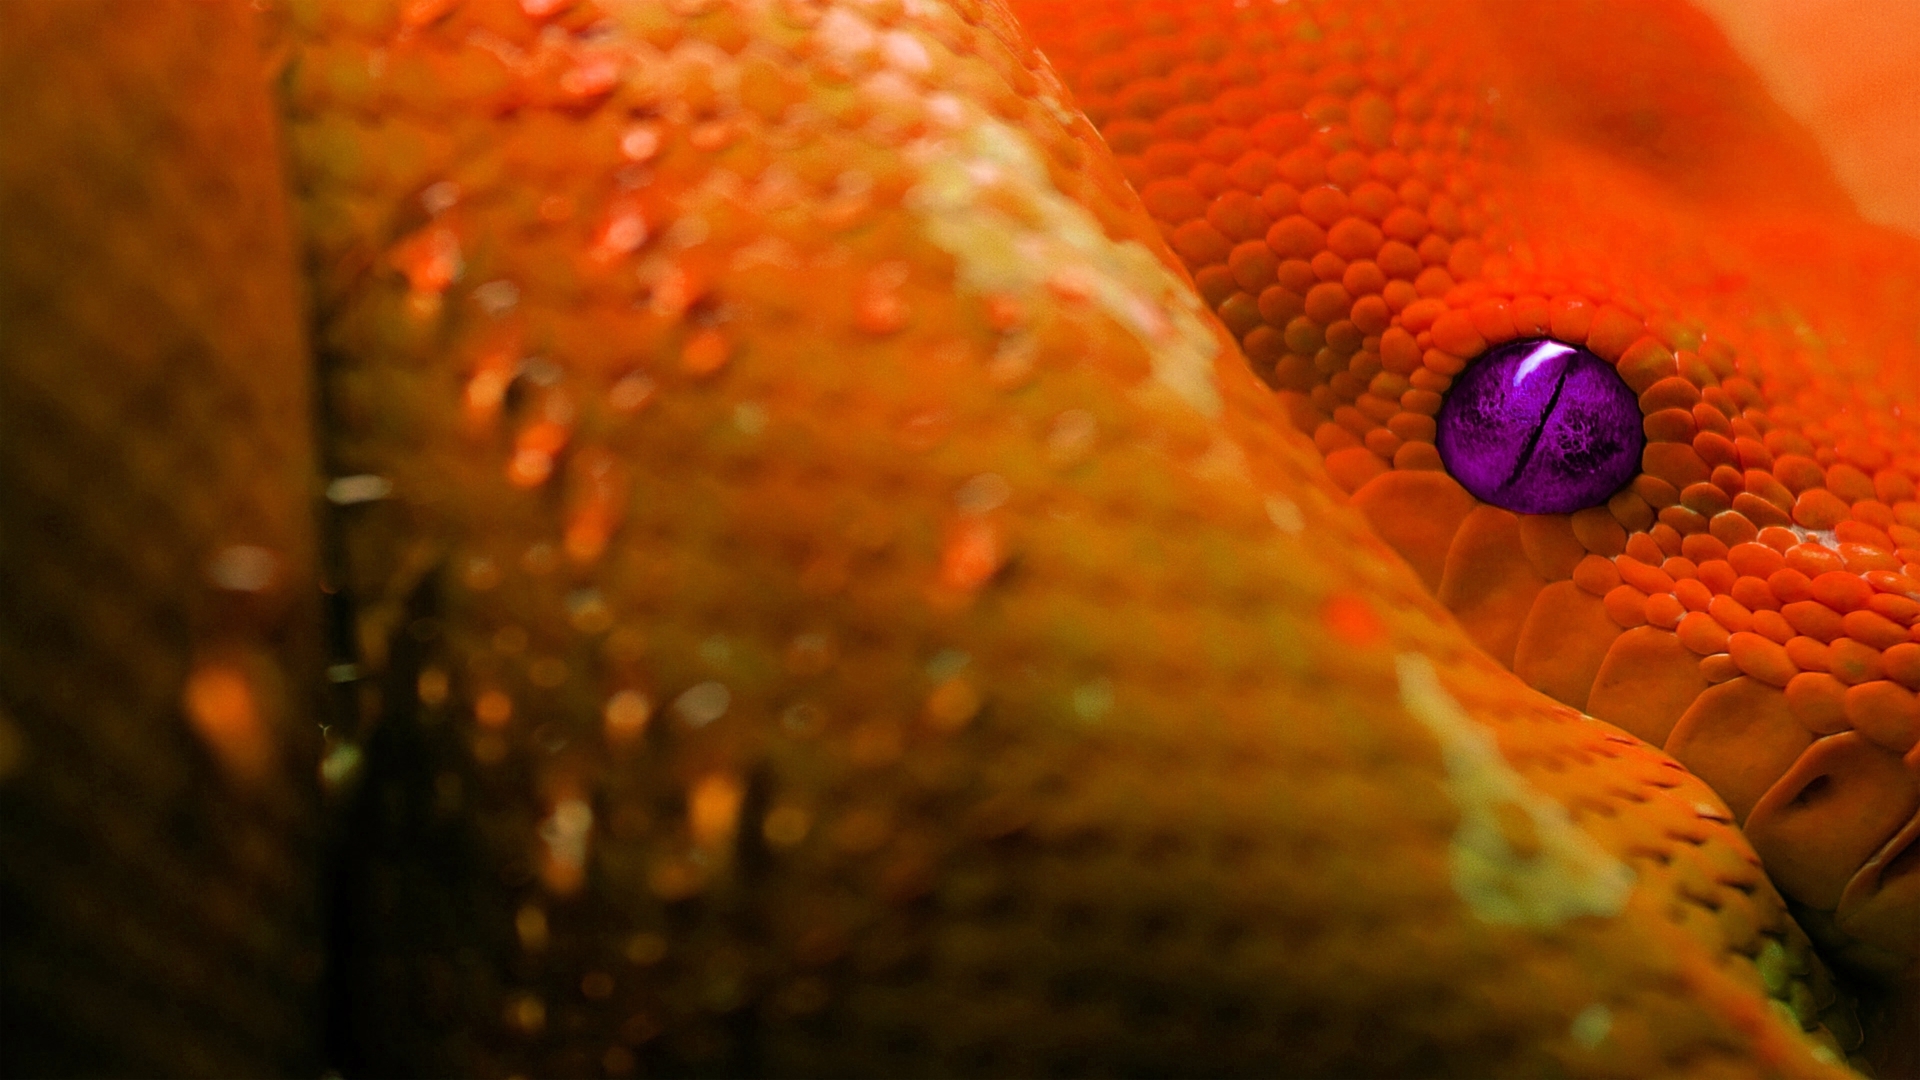 Vibrant orange boa snake against a textured background.